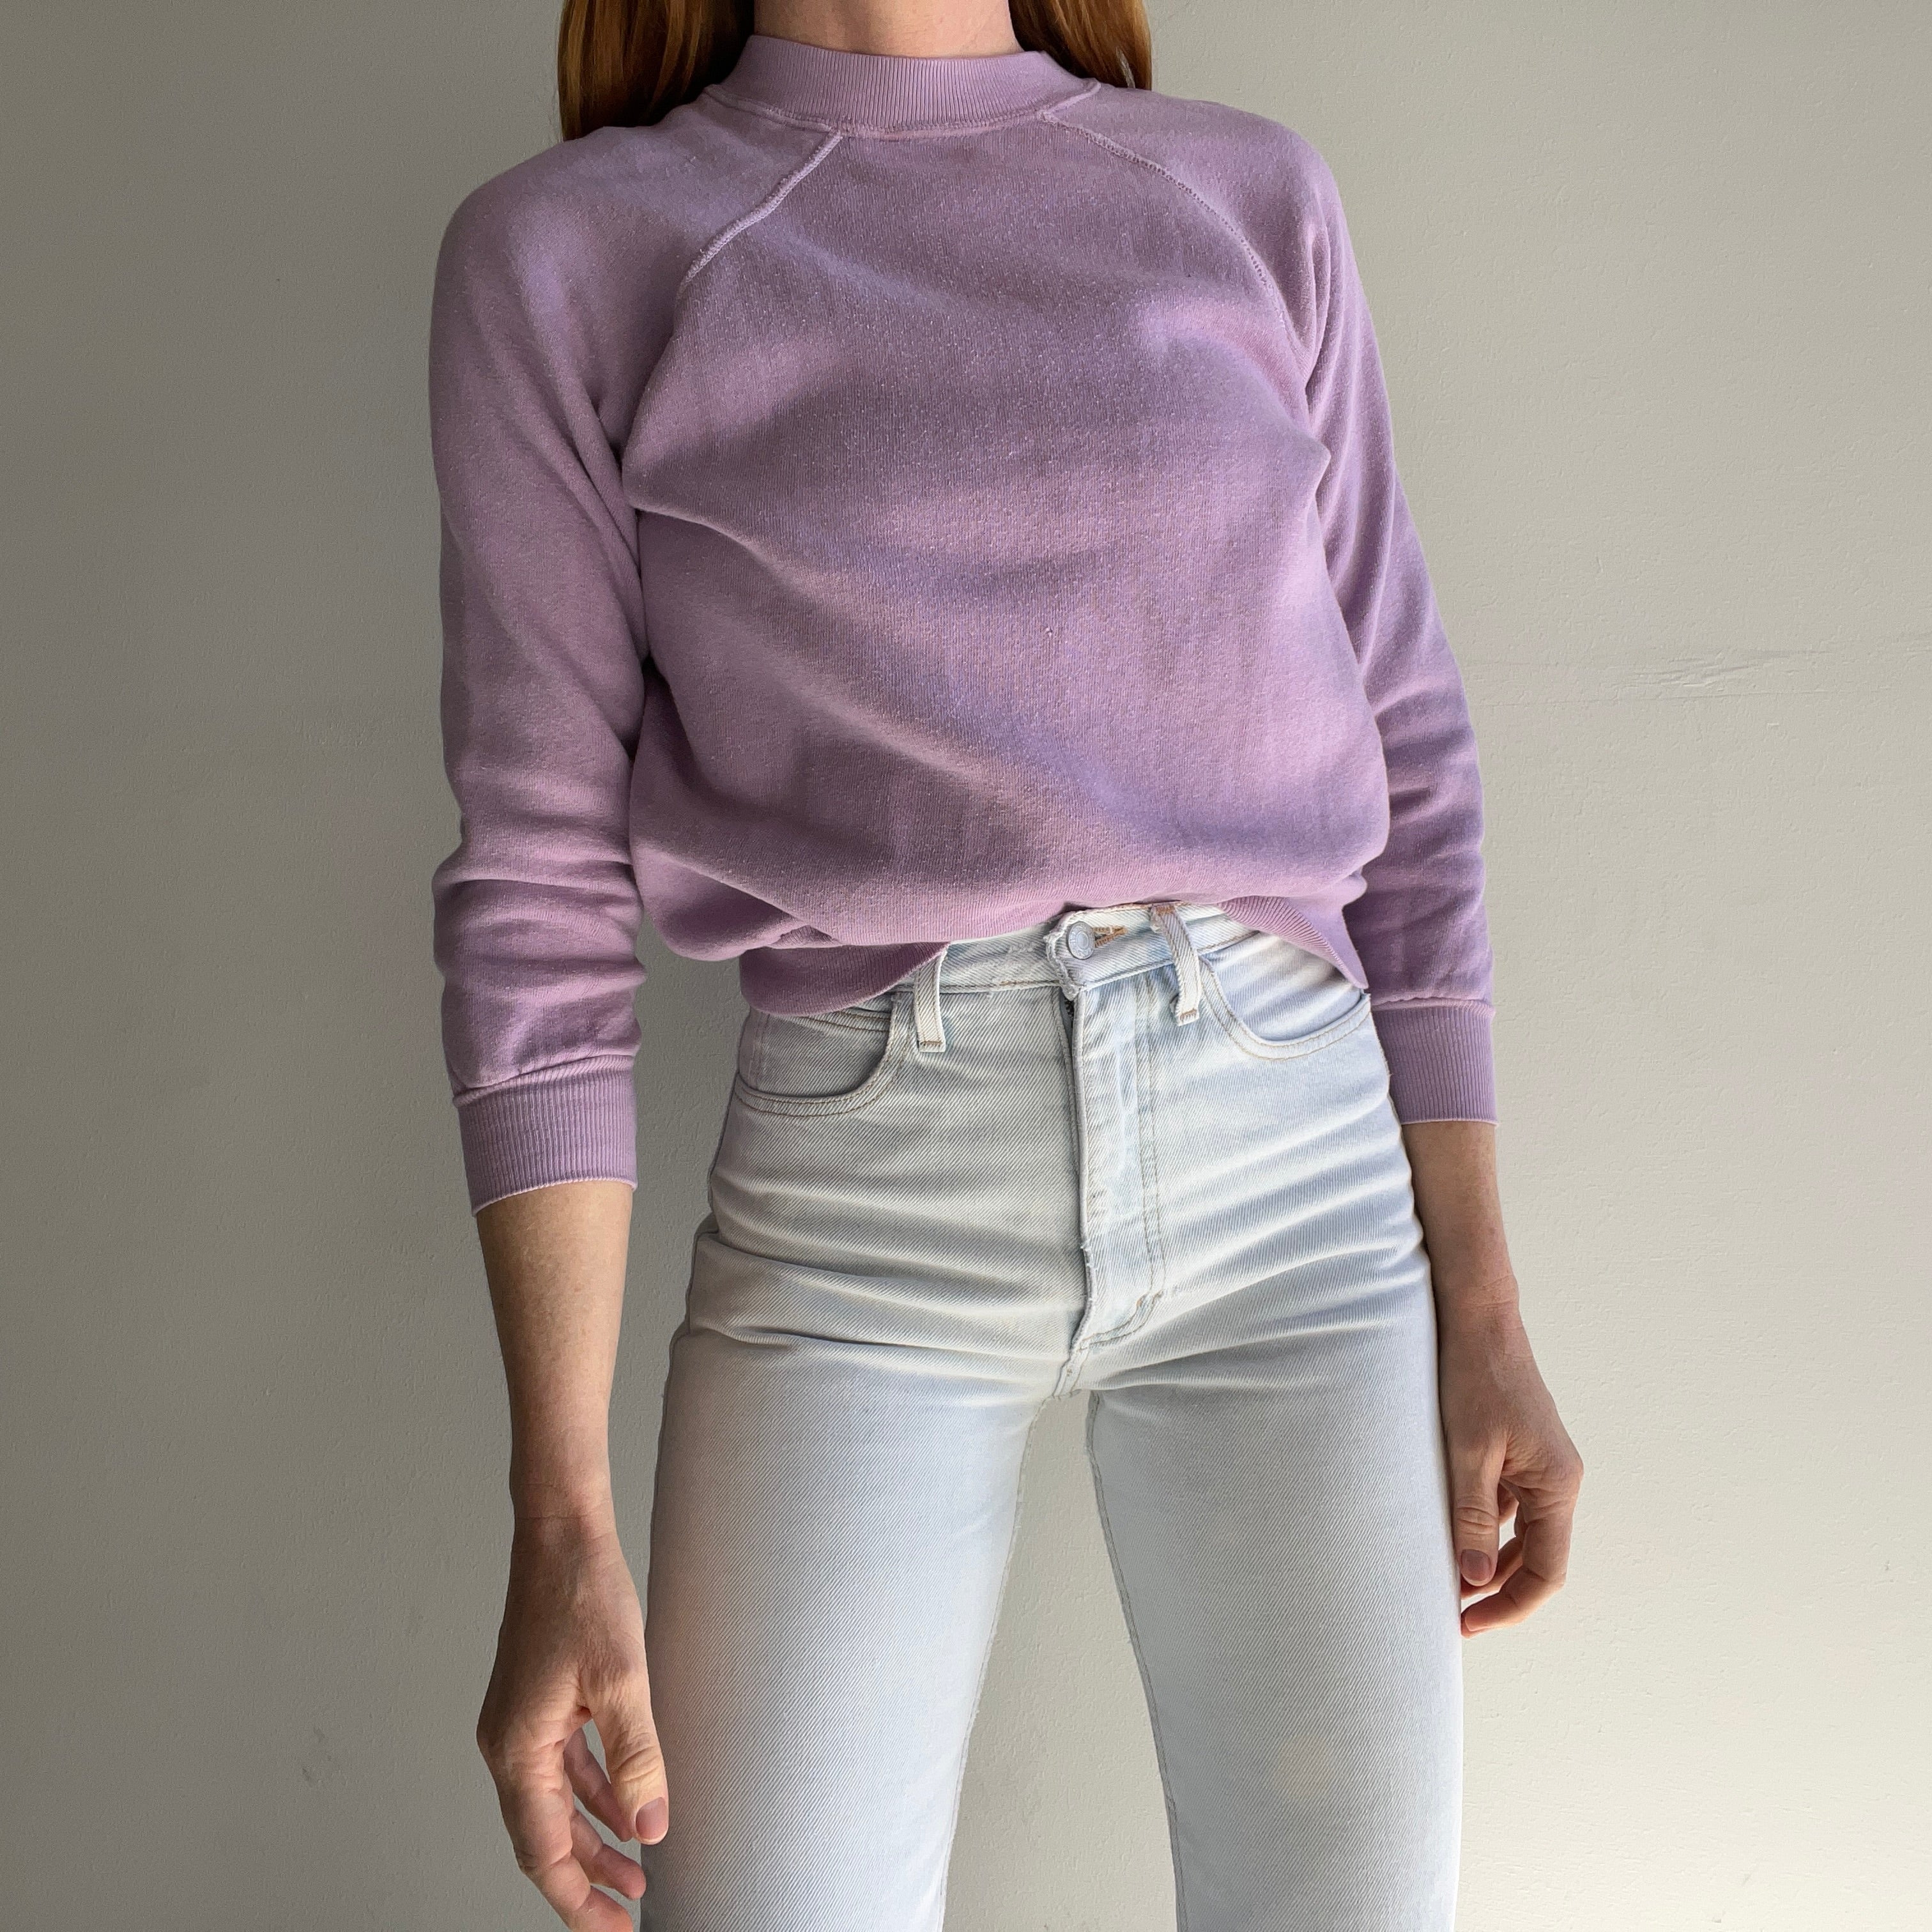 1980s Blank Lavender Smaller Size Sweatshirt